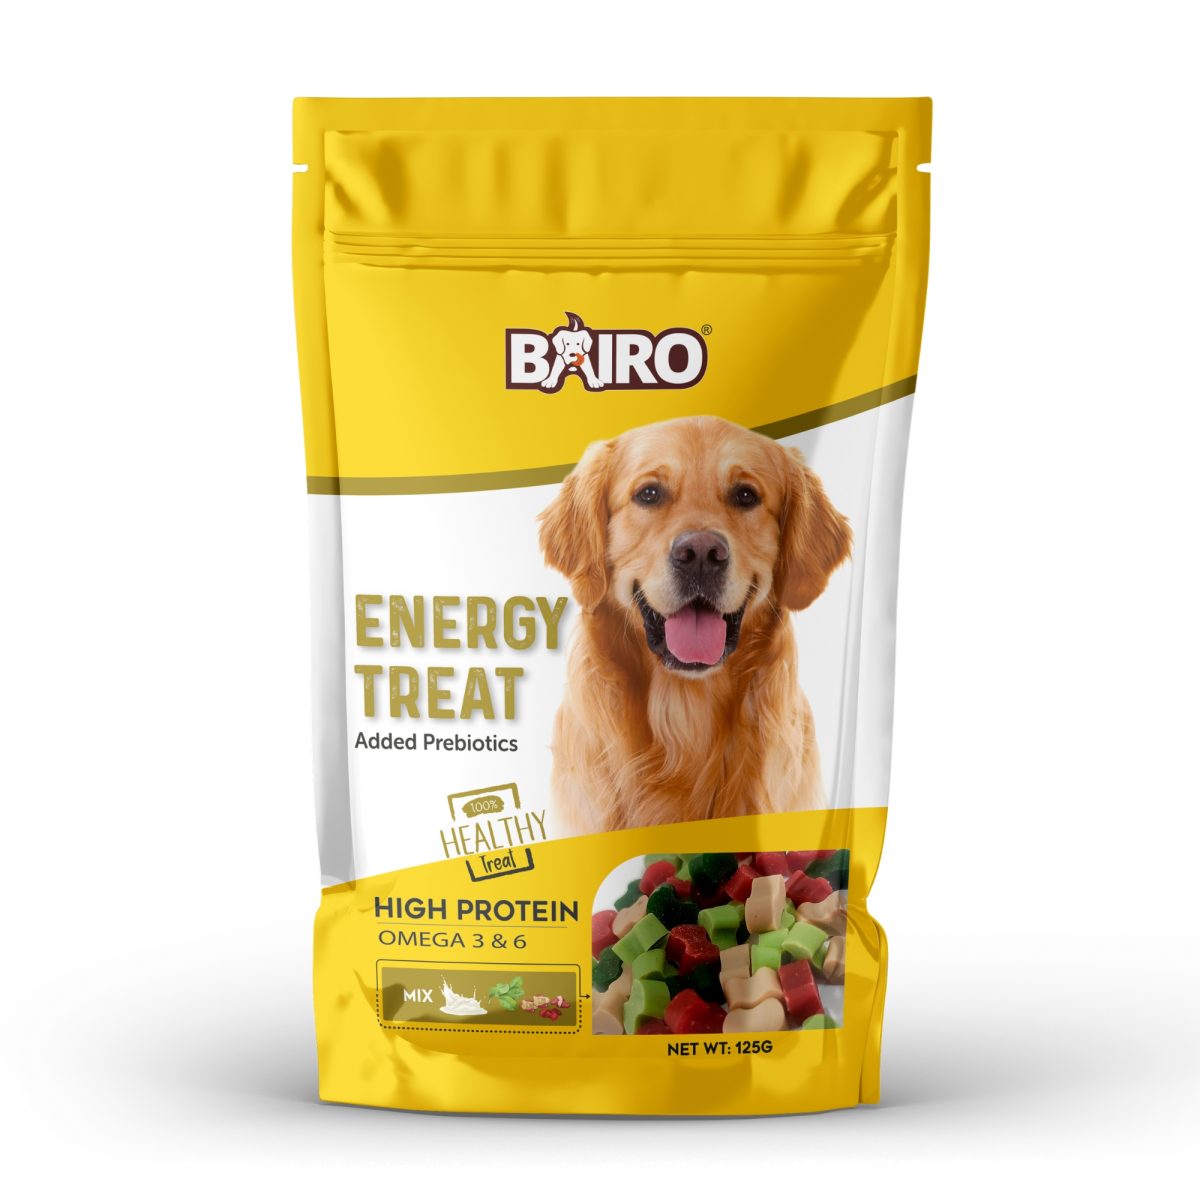 Bairo-Energy-Treat-6